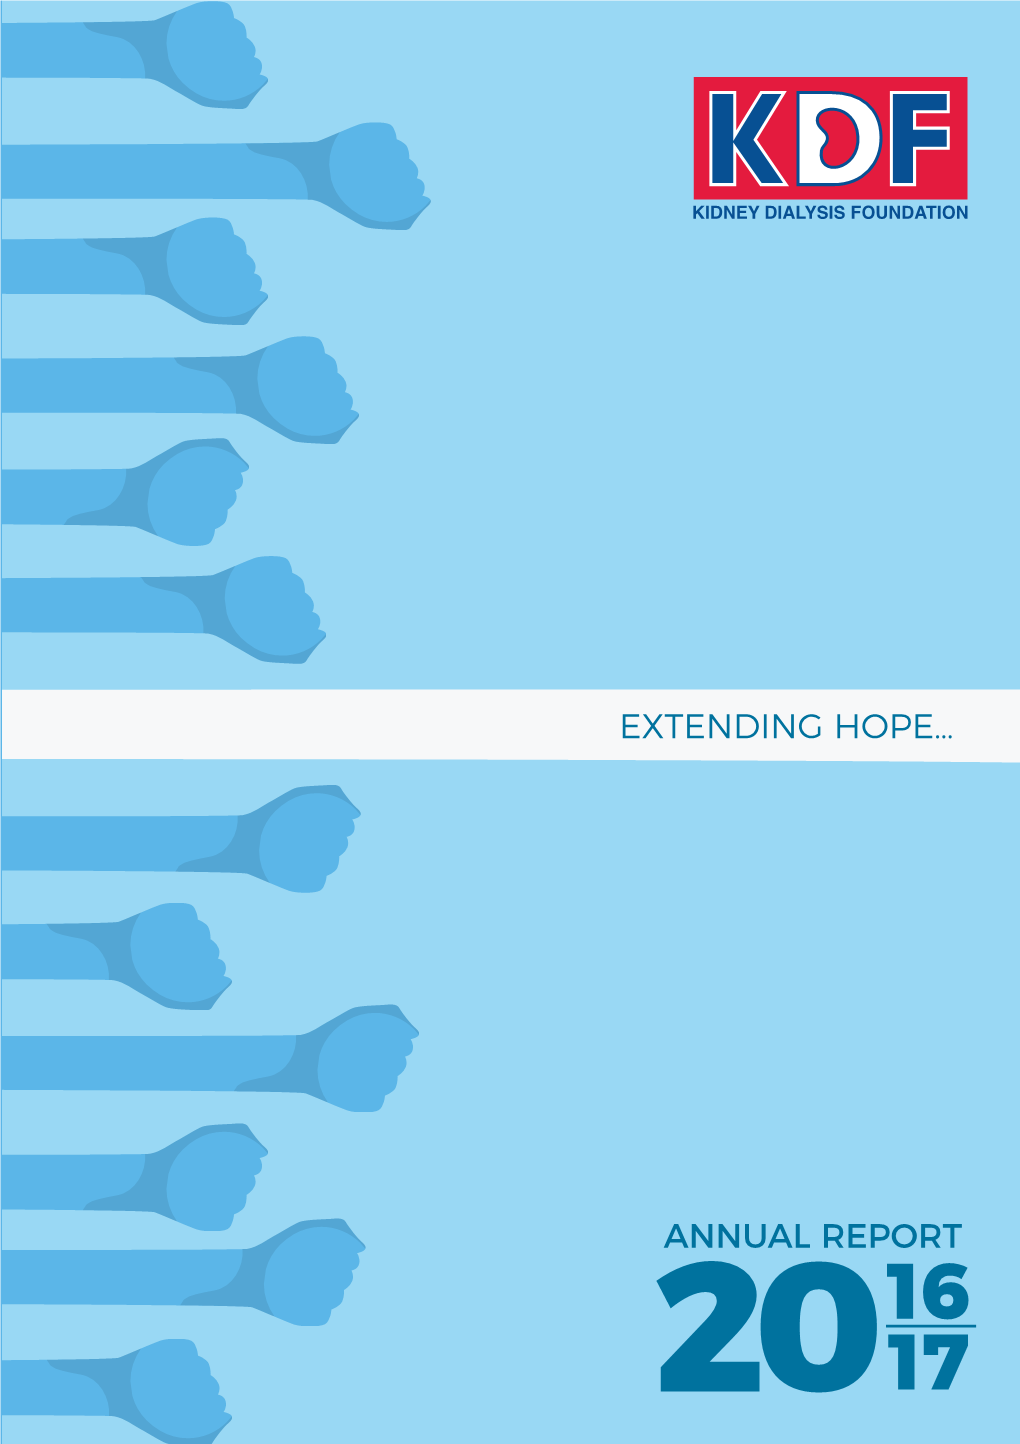 Extending Hope… …Our Lifelong Promise